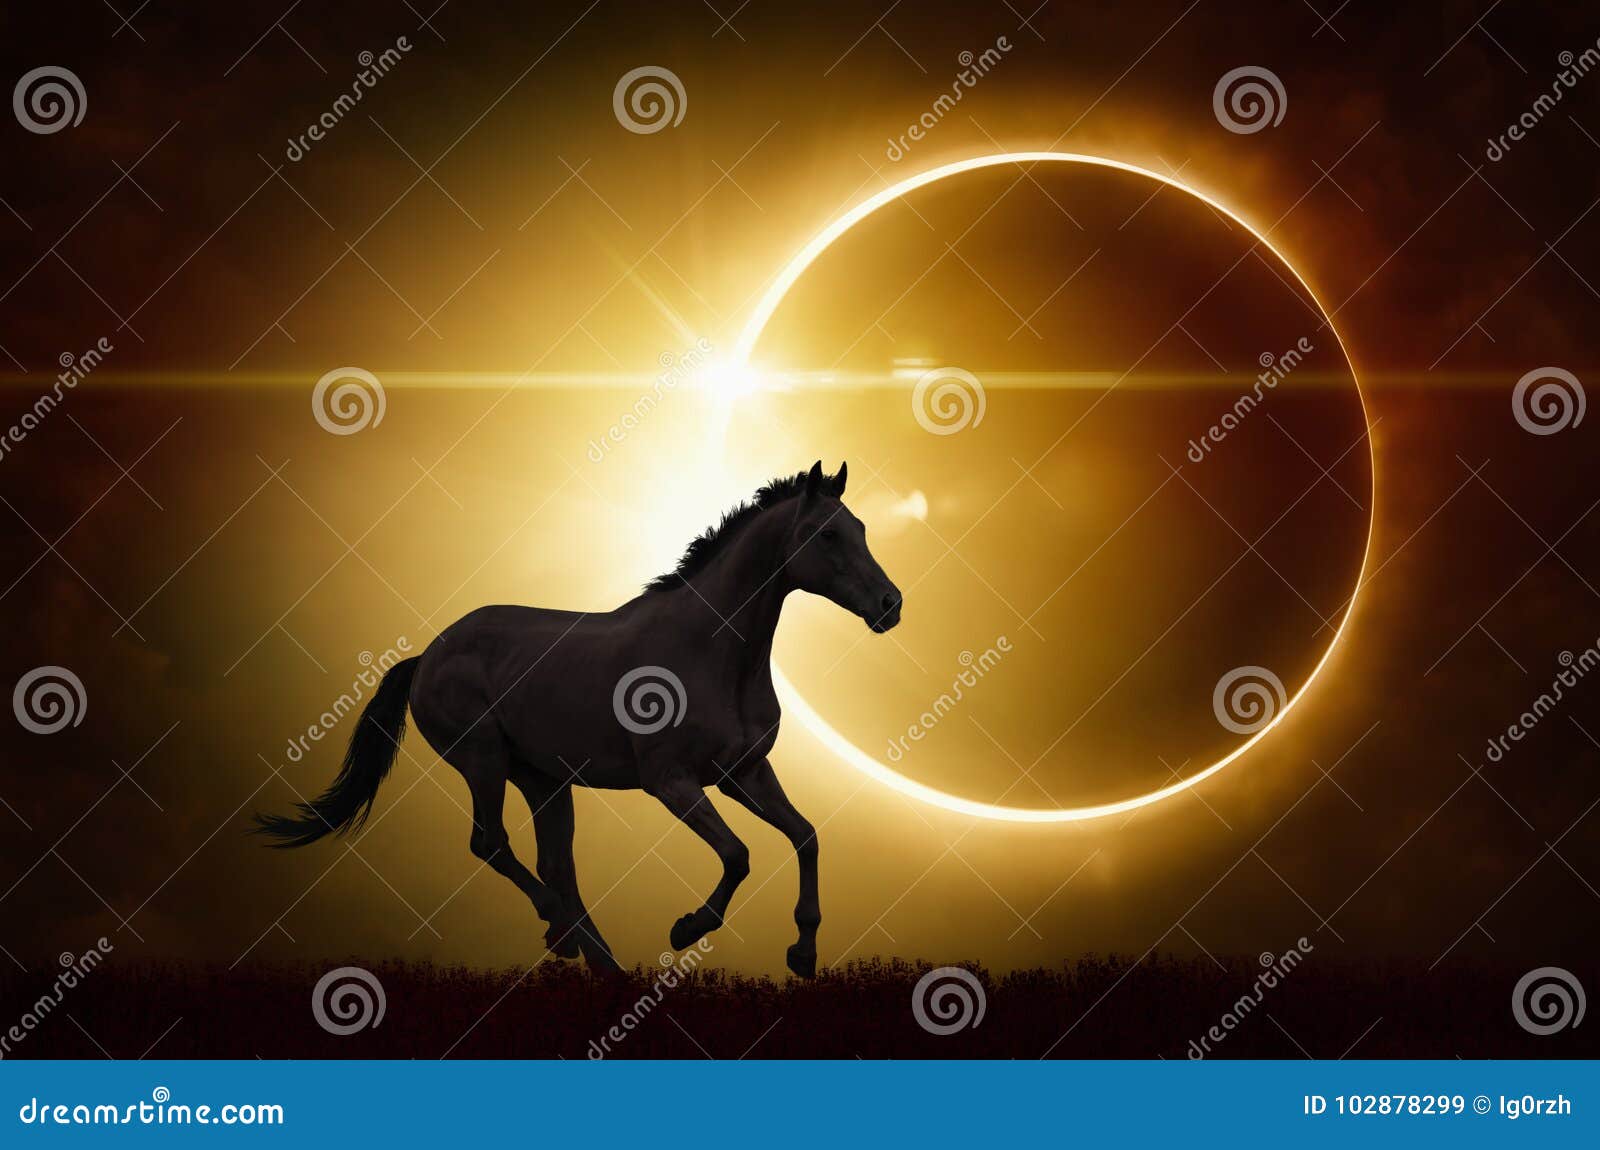 black horse on total solar eclipse background